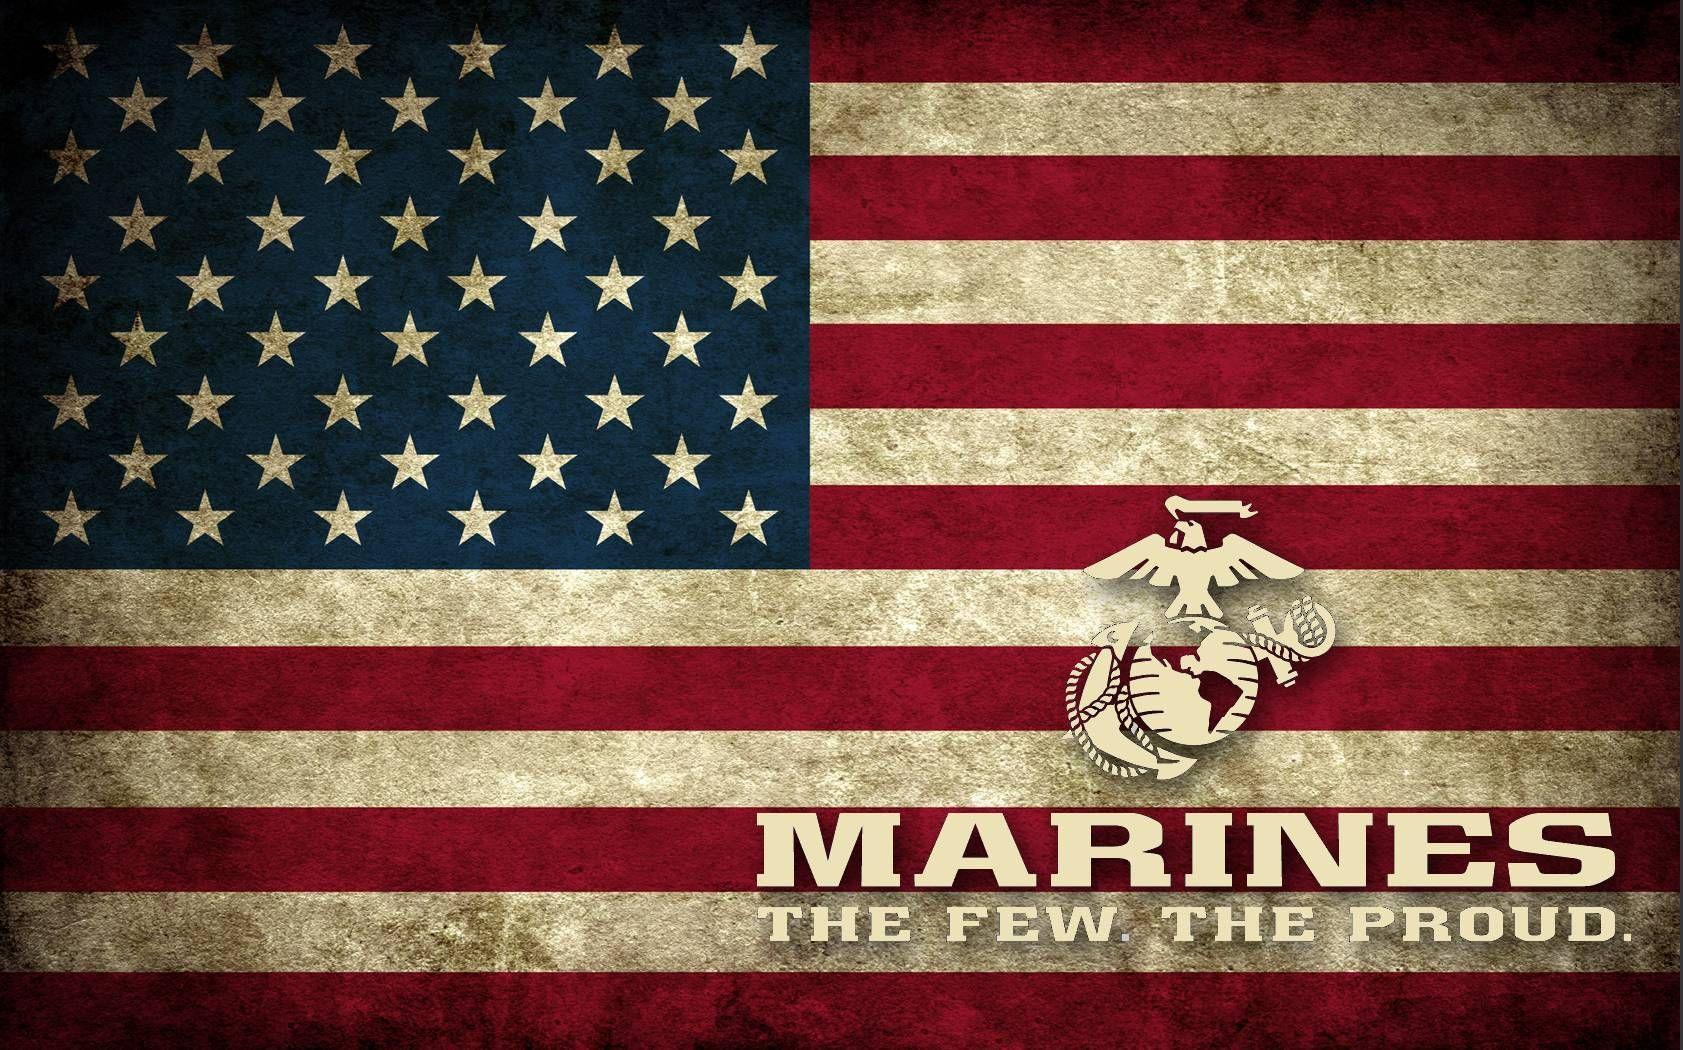 family, friends, and close ones. Usmc wallpaper, Happy birthday marines, Marines